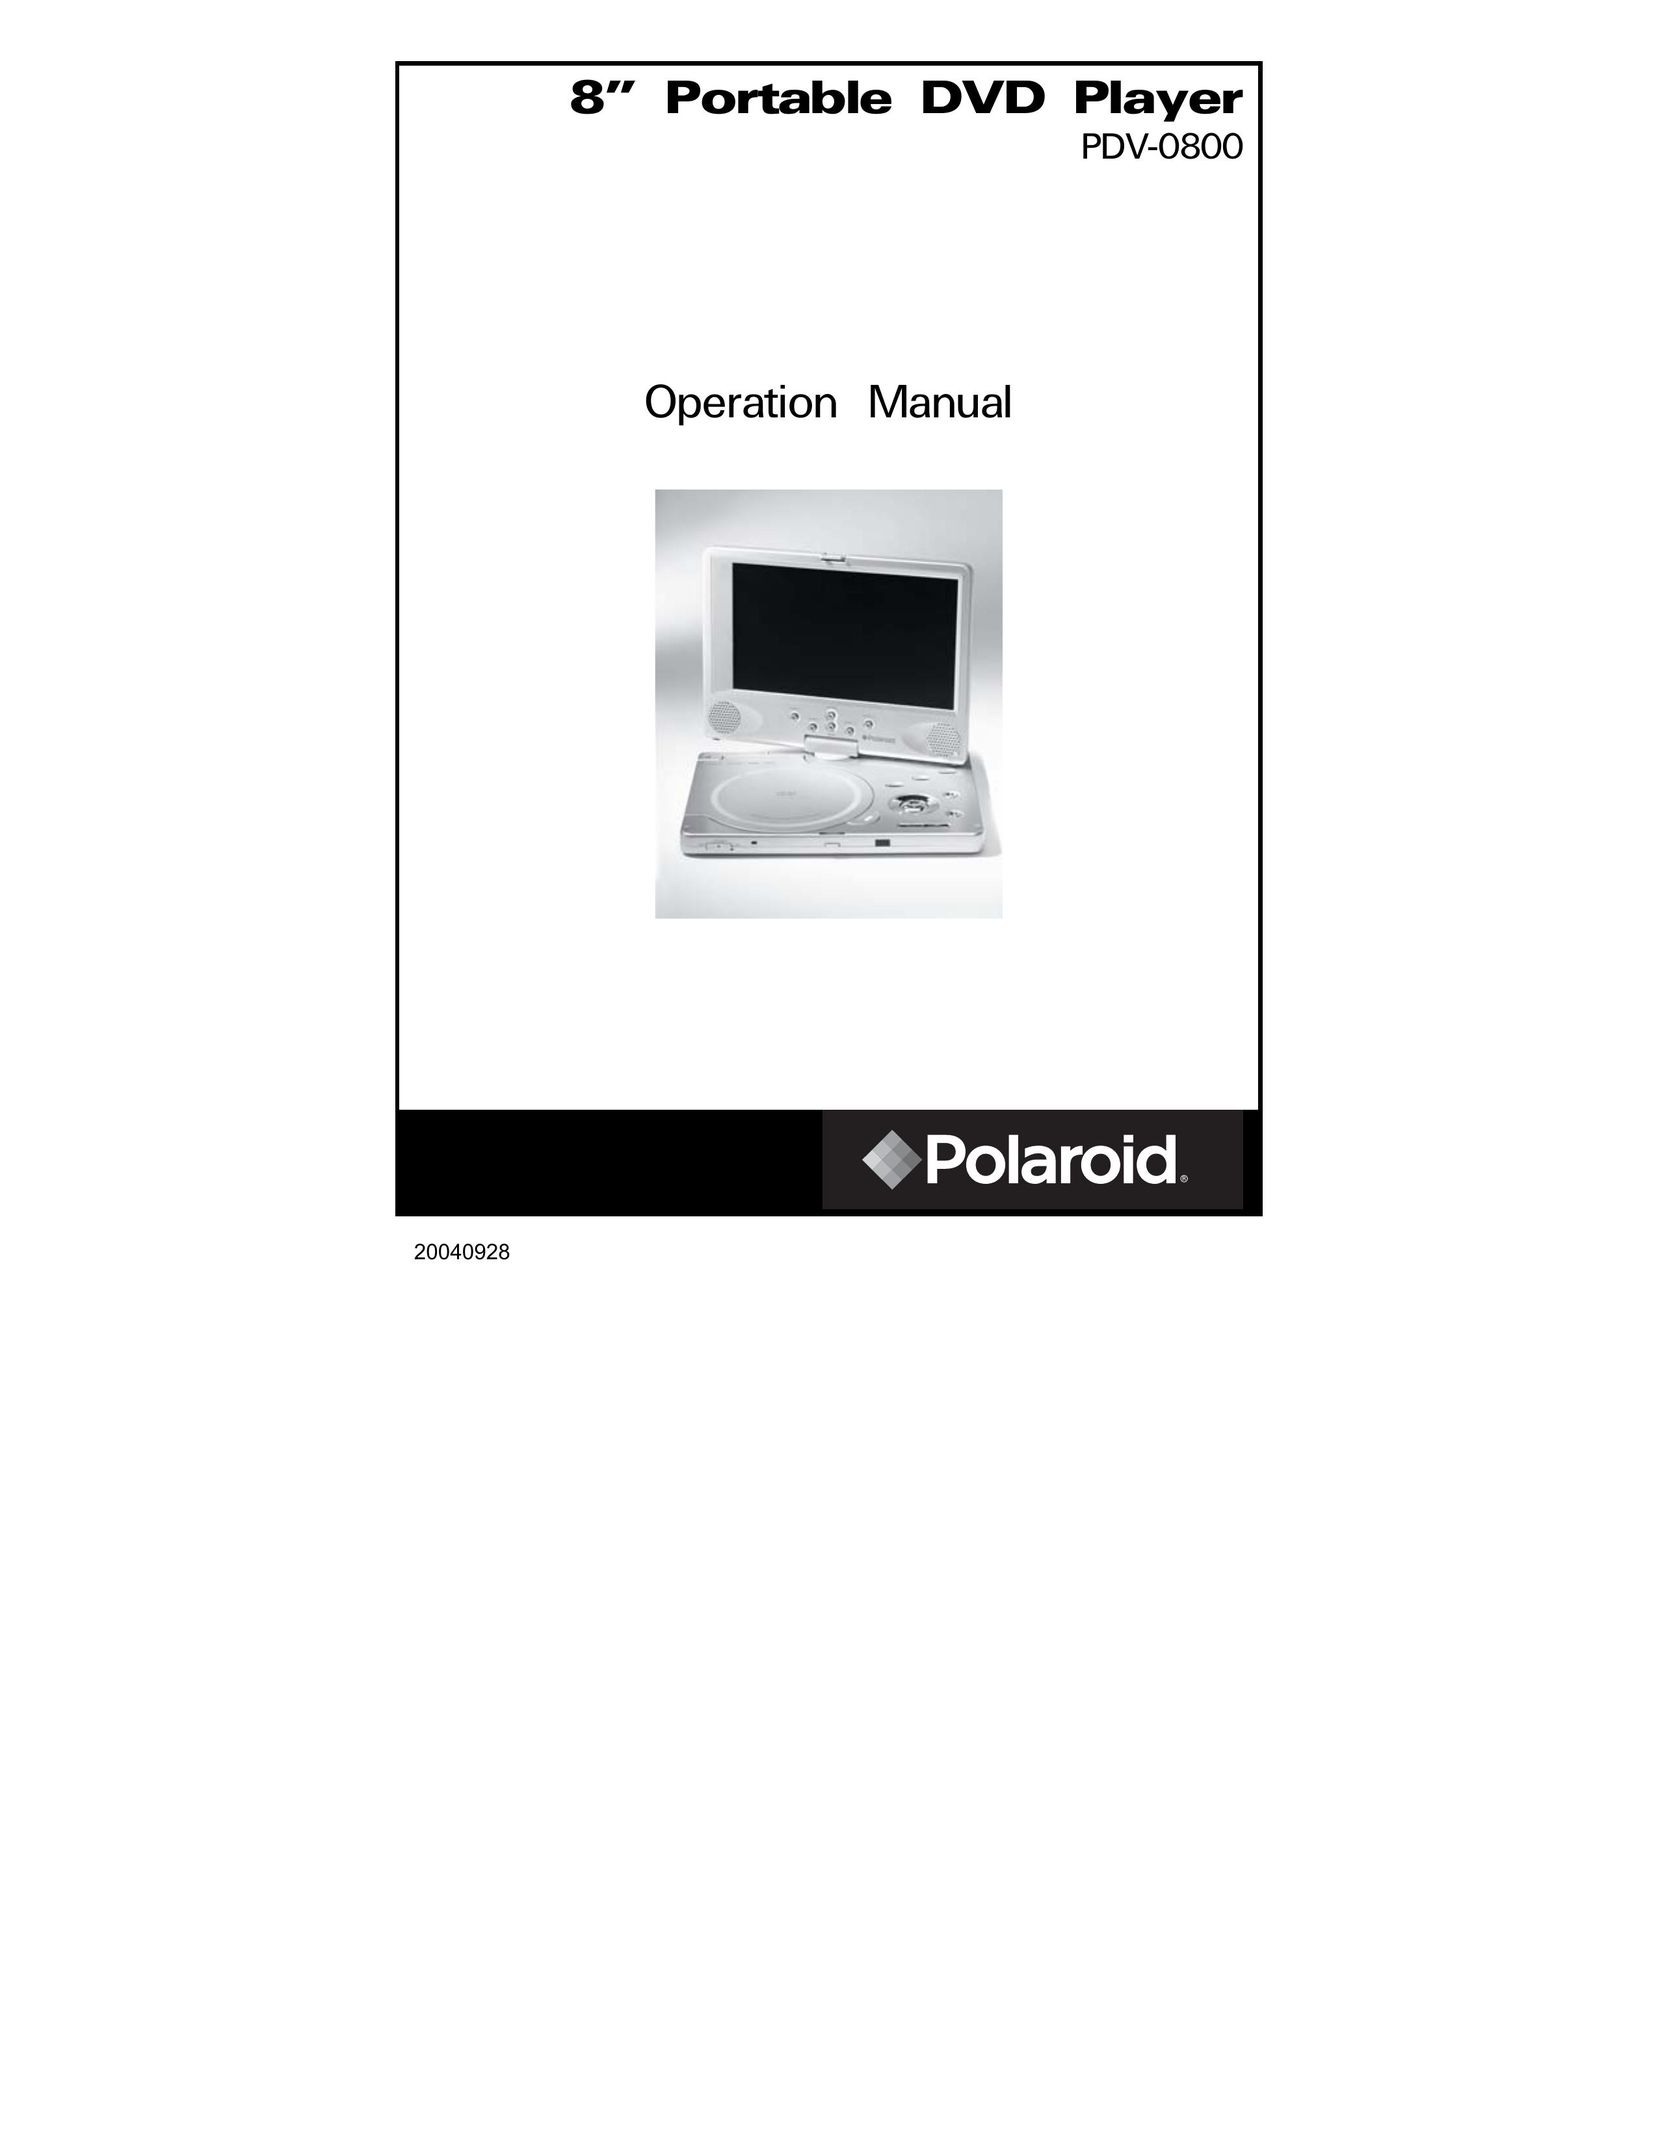 Polaroid PDV-0800 DVD Player User Manual